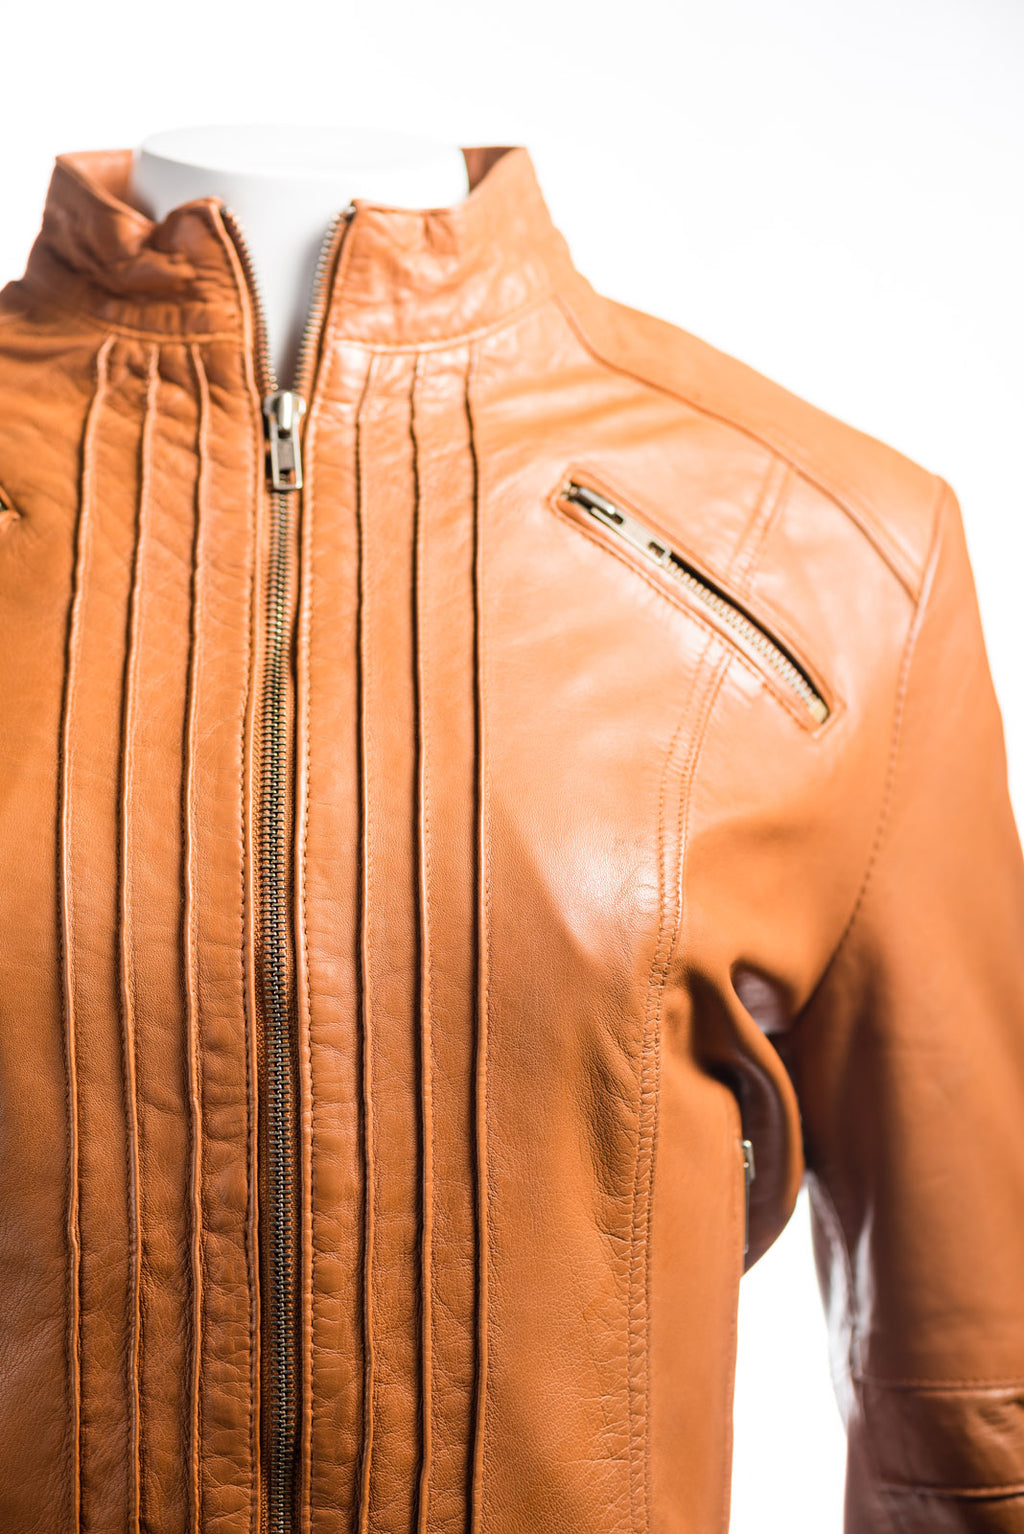 Ladies Tan Pleated Front Biker Style Leather Jacket: Gloria